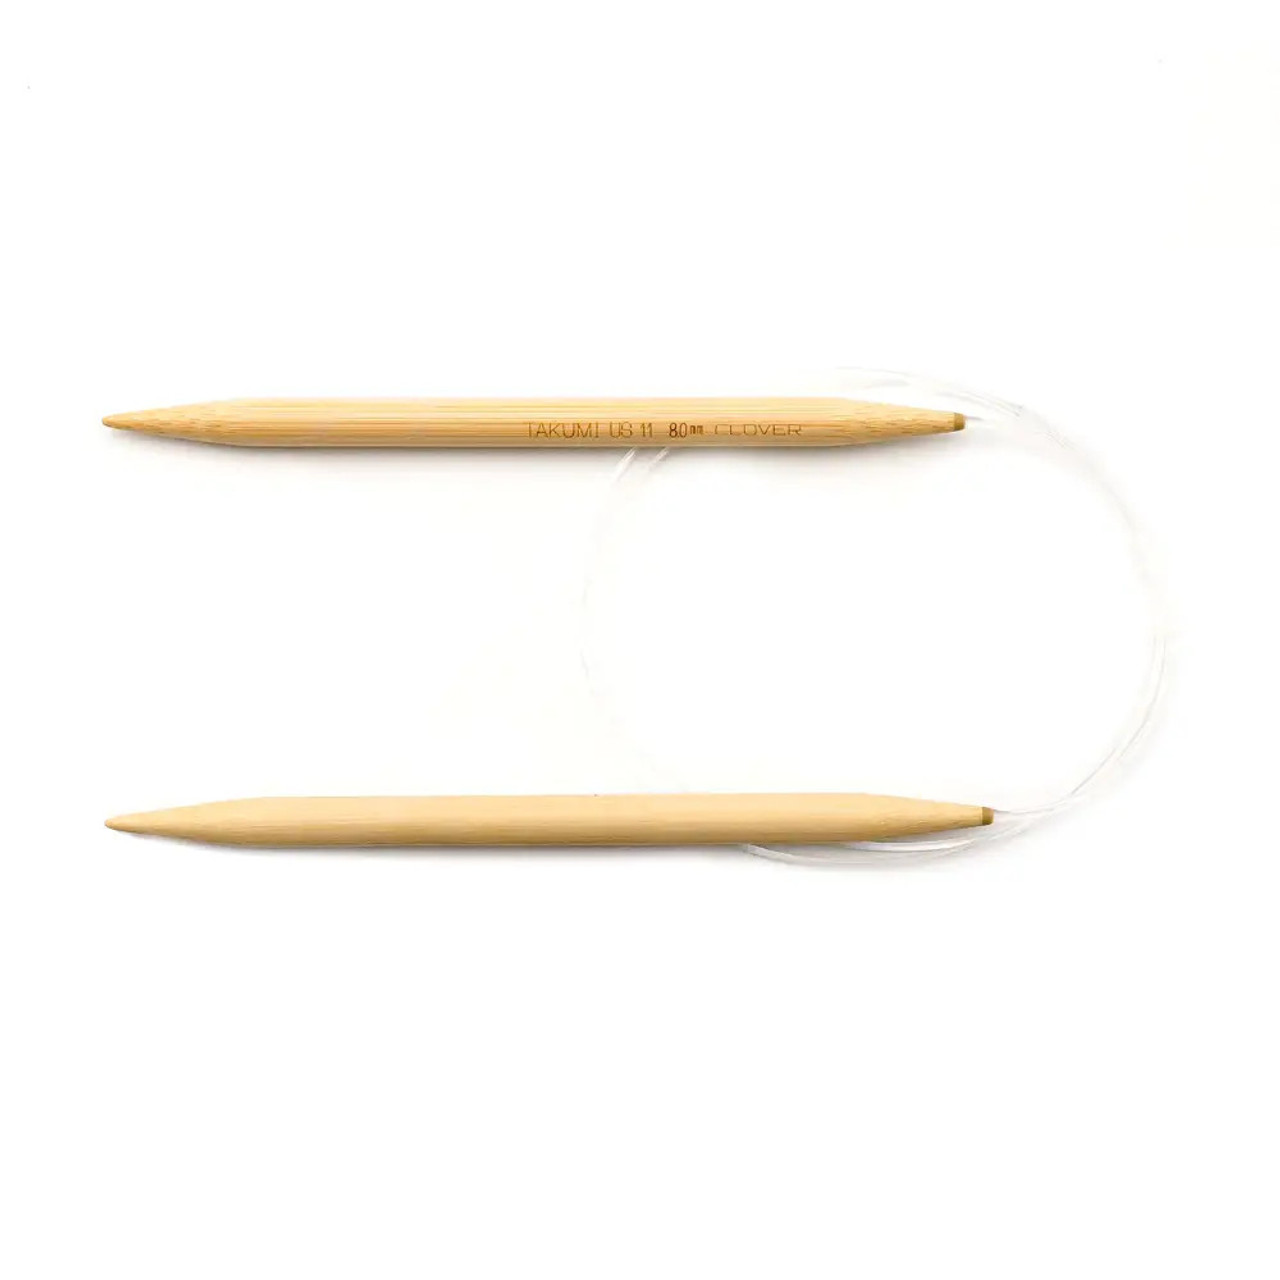 Clover Takumi Bamboo Circular Knitting Needles